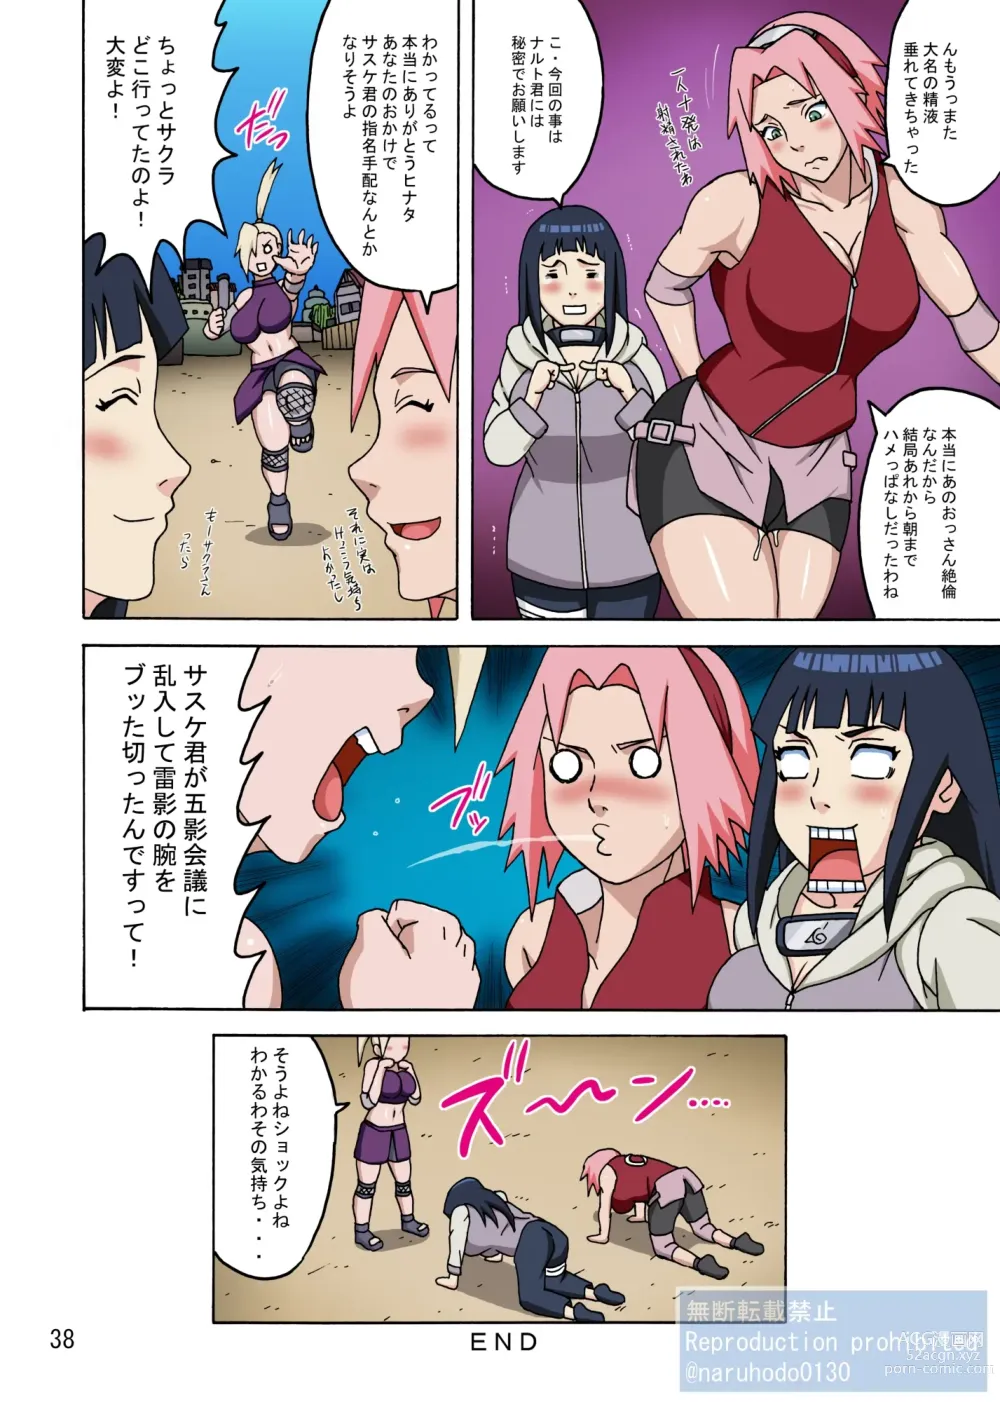 Page 39 of doujinshi SakuHina